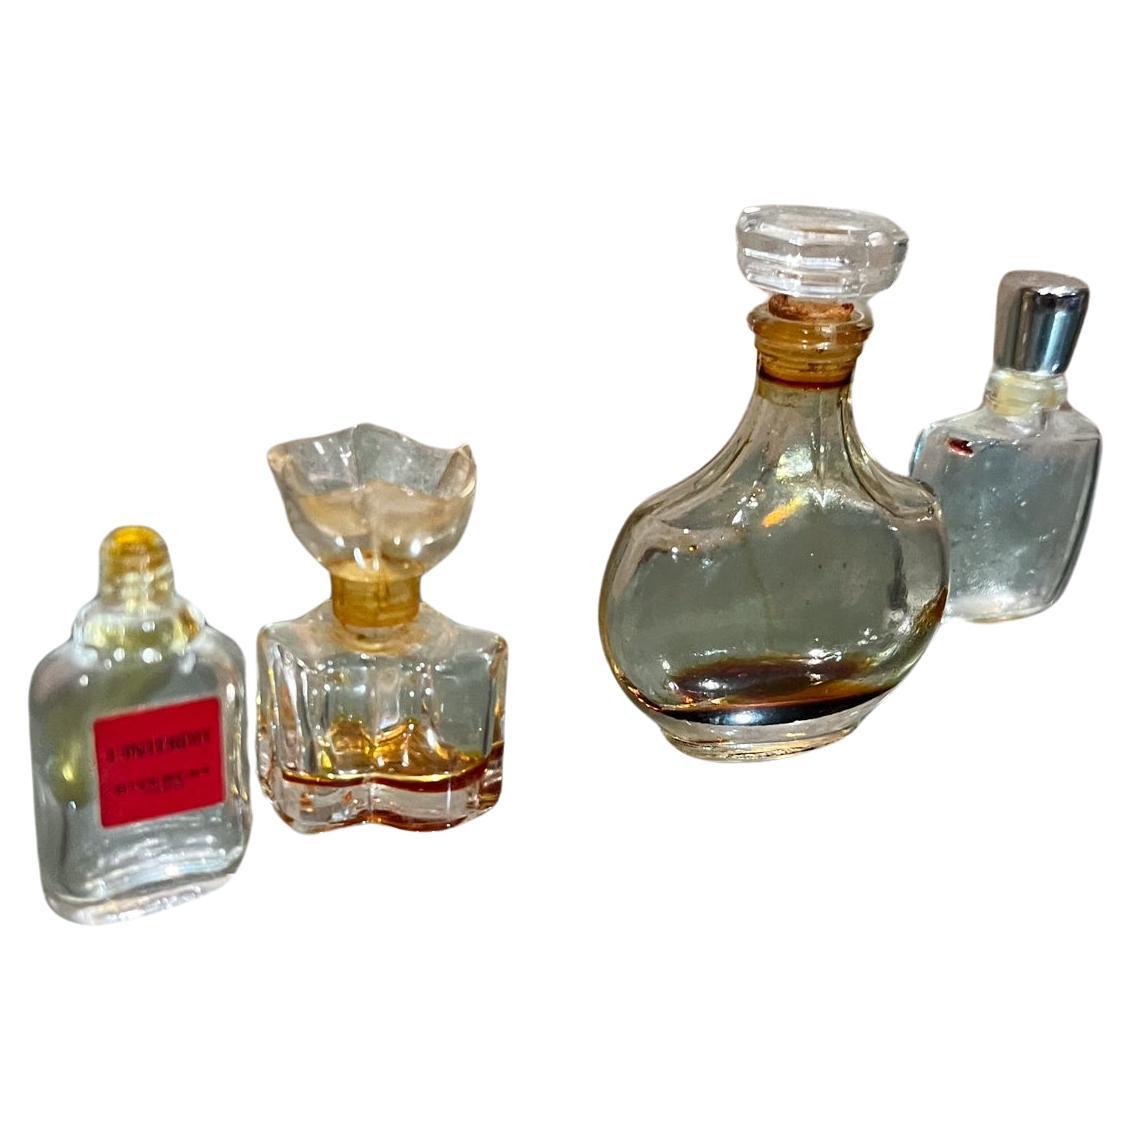 
Paris Vintage Vanity Miniature Glass Perfume Bottles
Set of four Vintage Vanity Glass Perfume Bottles
Includes Oscar de la Renta Givenchy Lancome Paris
Tallest 2.75, Smallest 1.75
Preowned vintage
See all images for condition.